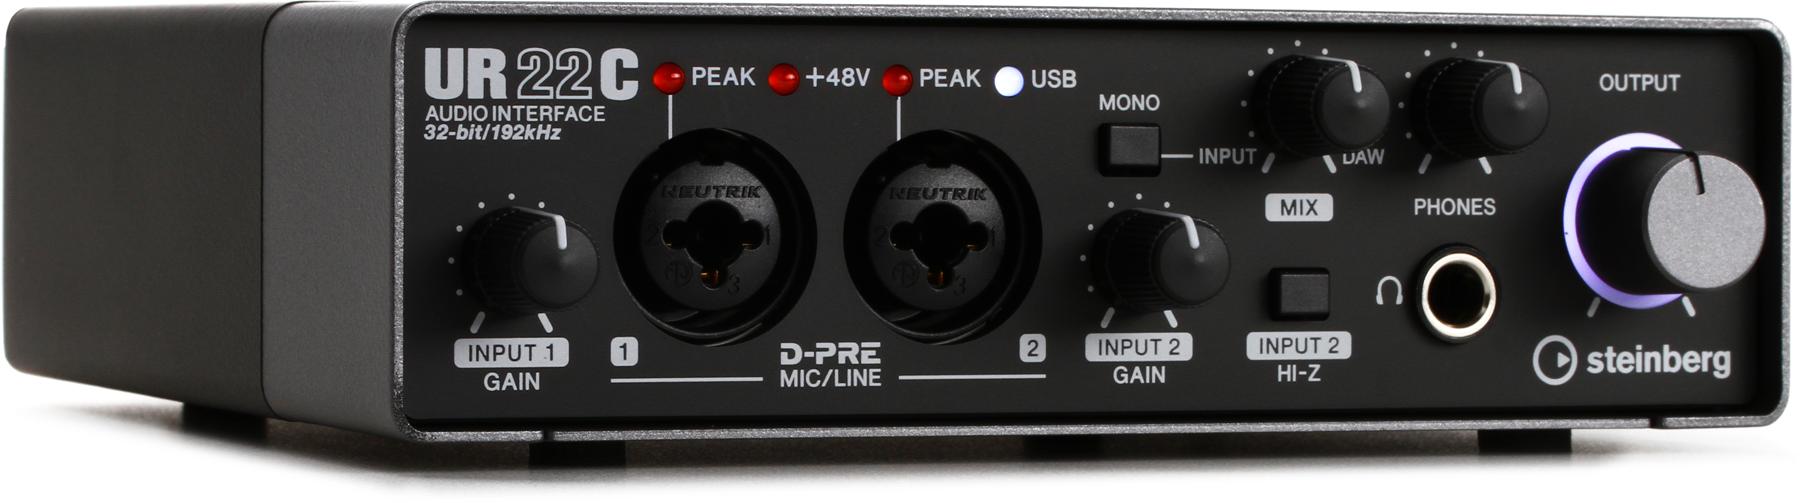 Steinberg UR22C USB Audio Interface main image